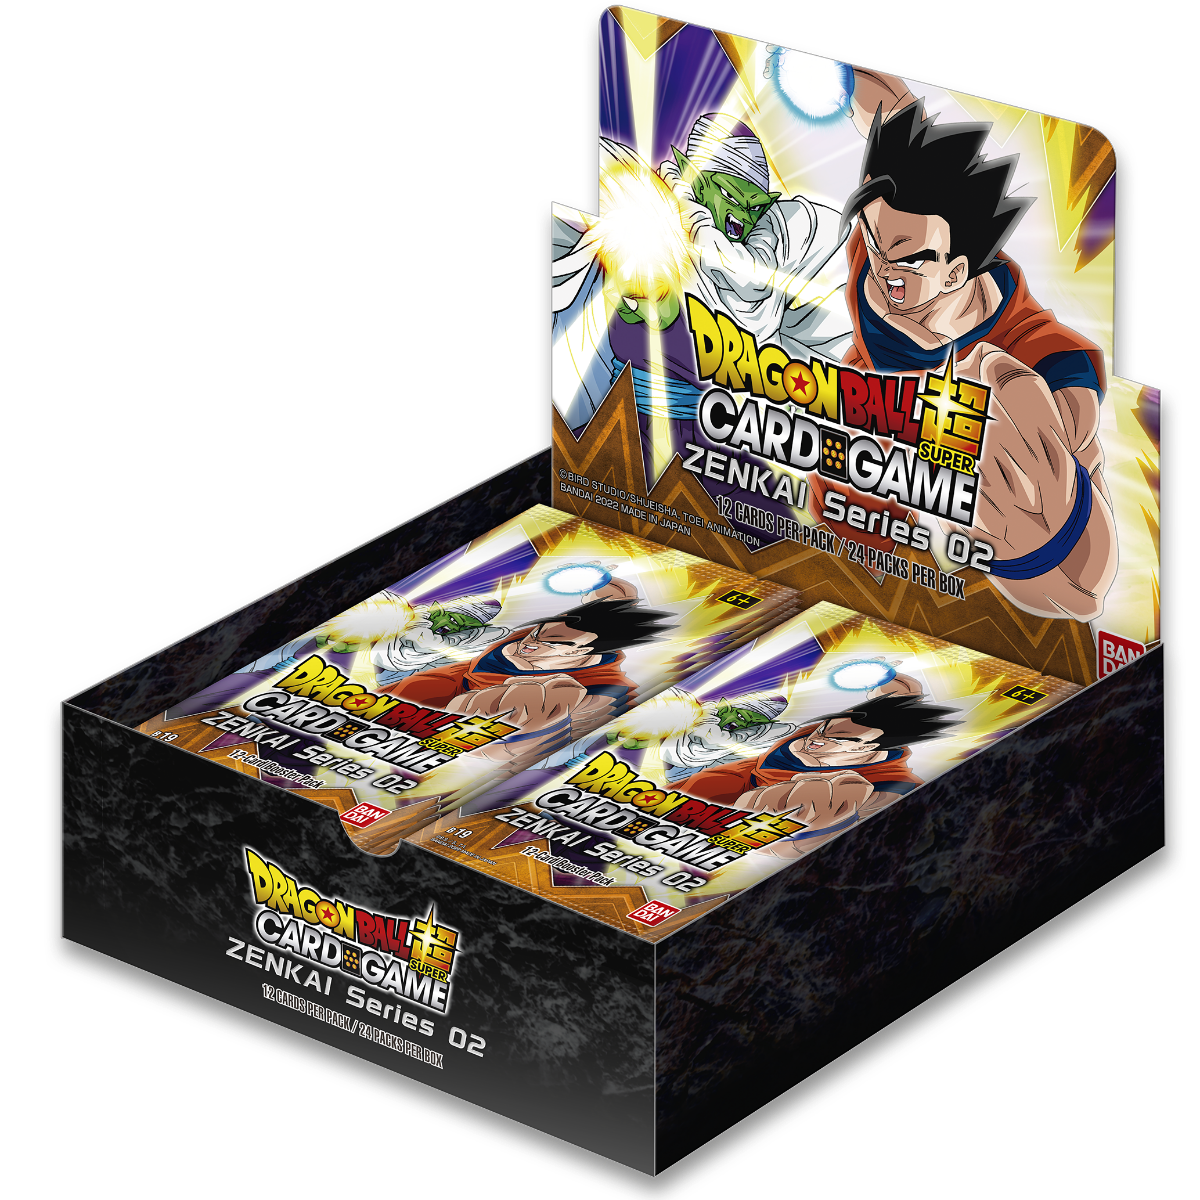 Dragon Ball Super Card Game Zenkai Series Set 02 Booster Display ã€B19ã€‘